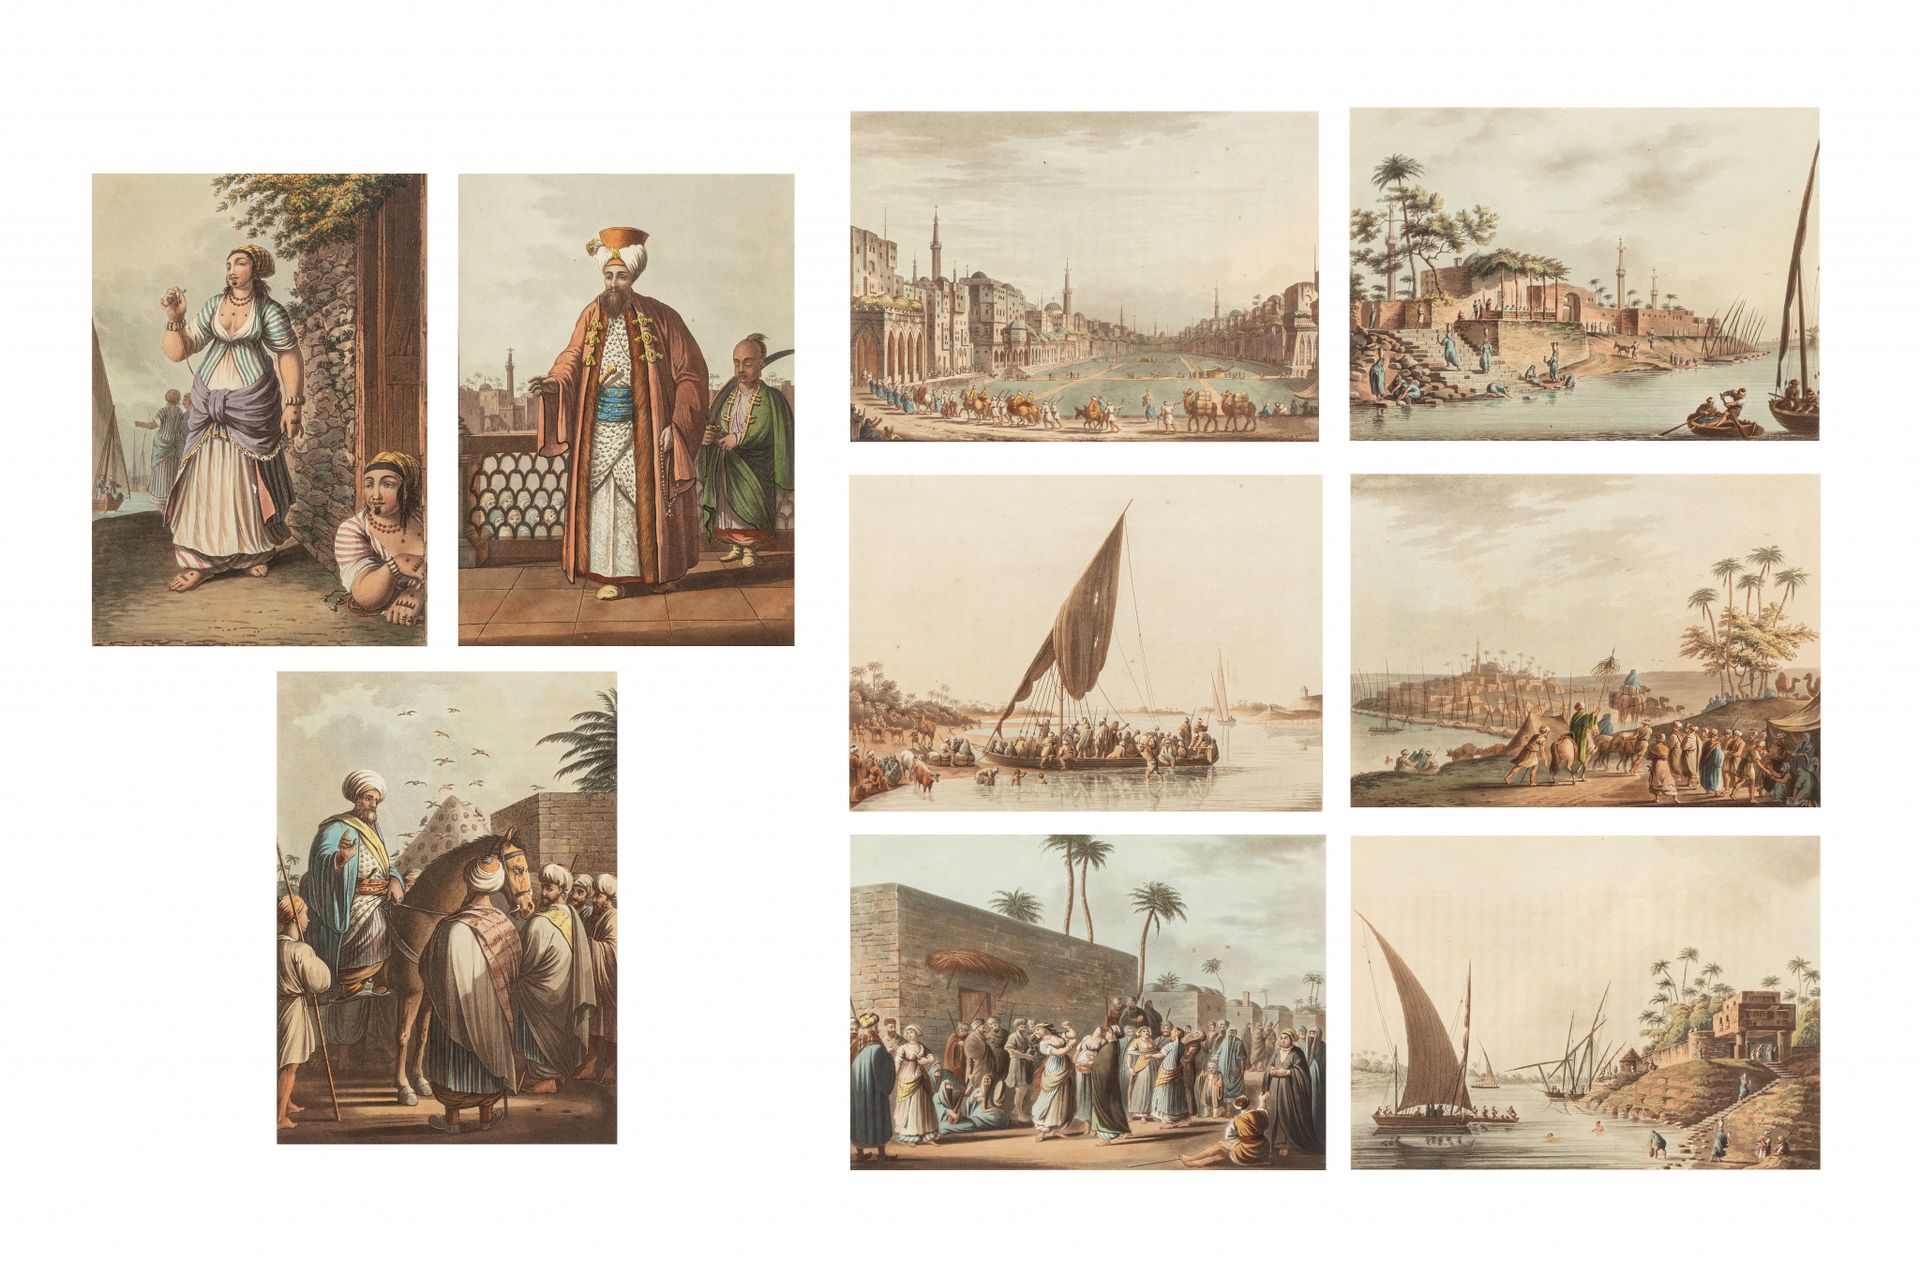 Neuf gravures sur l'Egypte London, 1802, edited by Robert Bowyer (1758-1834)

Ha&hellip;